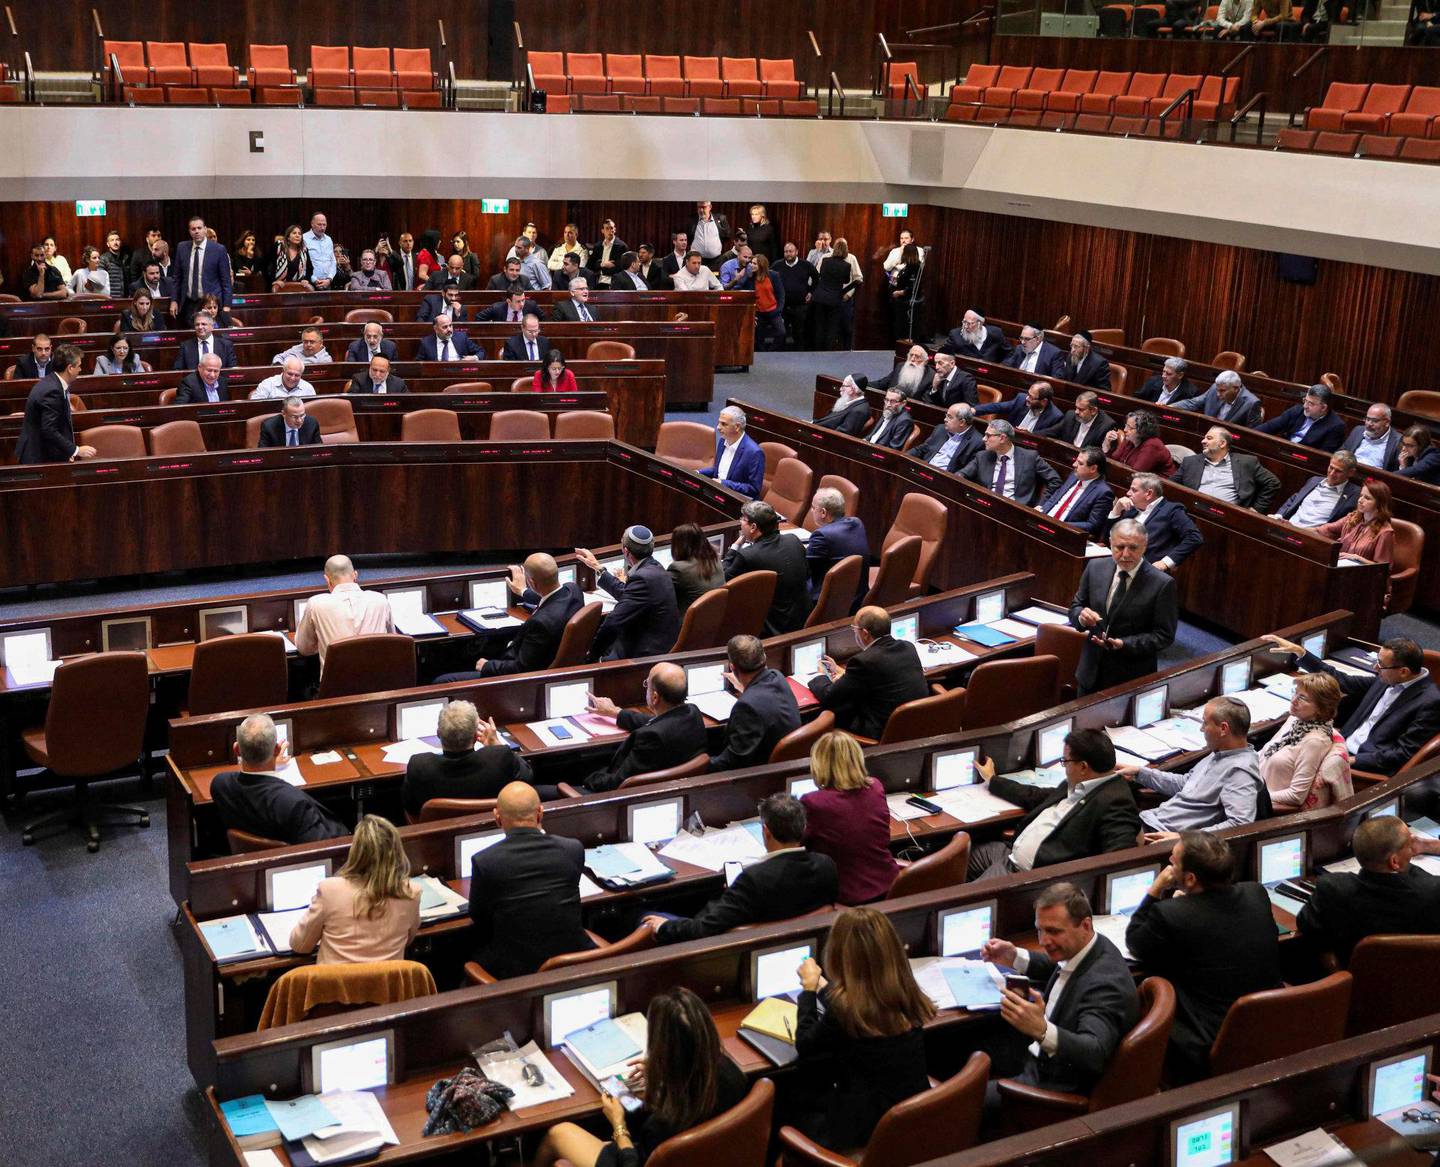 Seks av de 120 medlemmene i det israelske parlamentet, Knesset, er åpent homofile. Her et bilde fra desember i fjor. Foto: Gali Tibbon/AFP/NTB scanpix